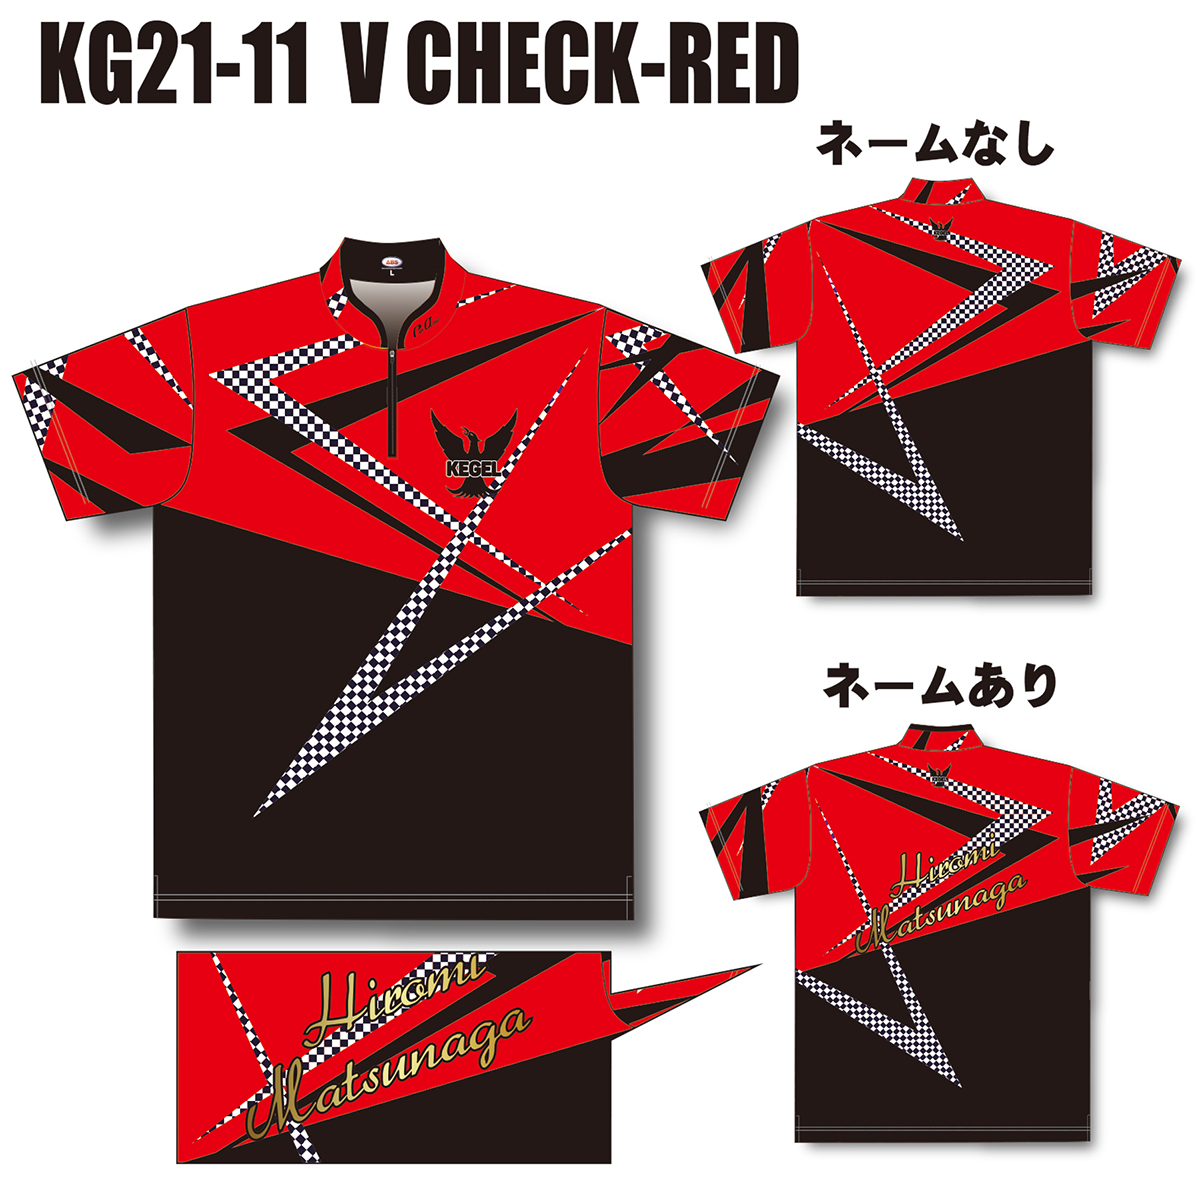 KEGEL KG21-11(V CHECK-RED)